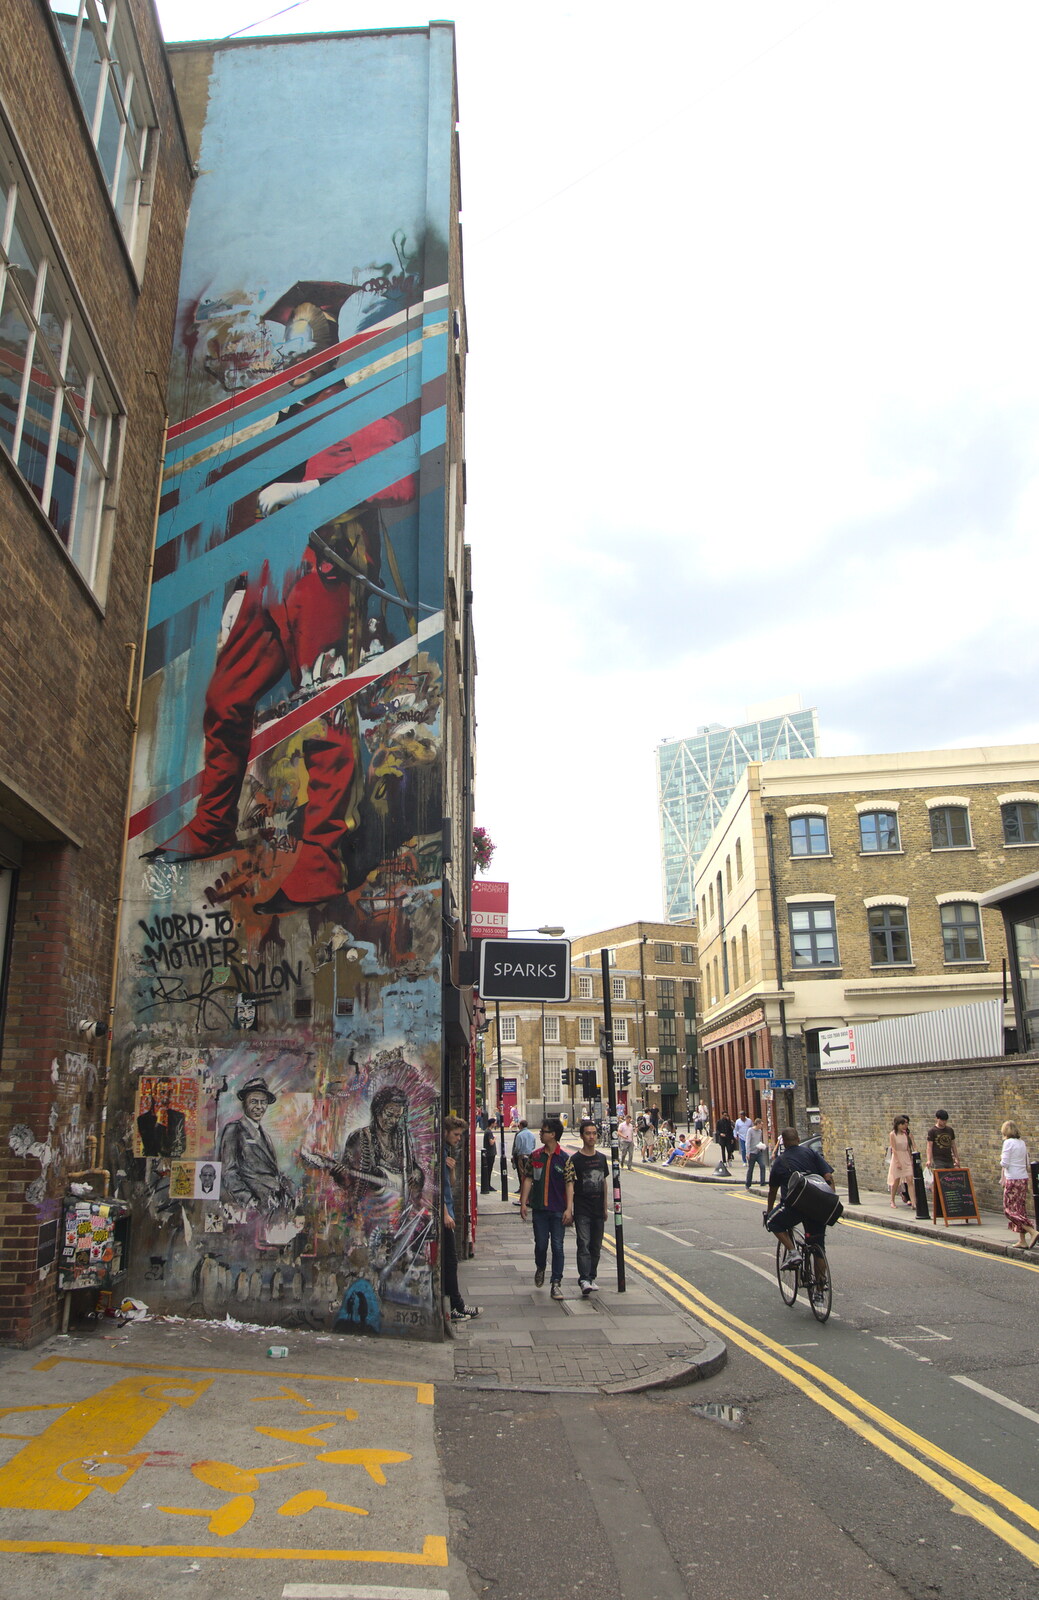 Street art on Hanbury Street from Spitalfields and Brick Lane Street Art, Whitechapel, London - 10th August 2013